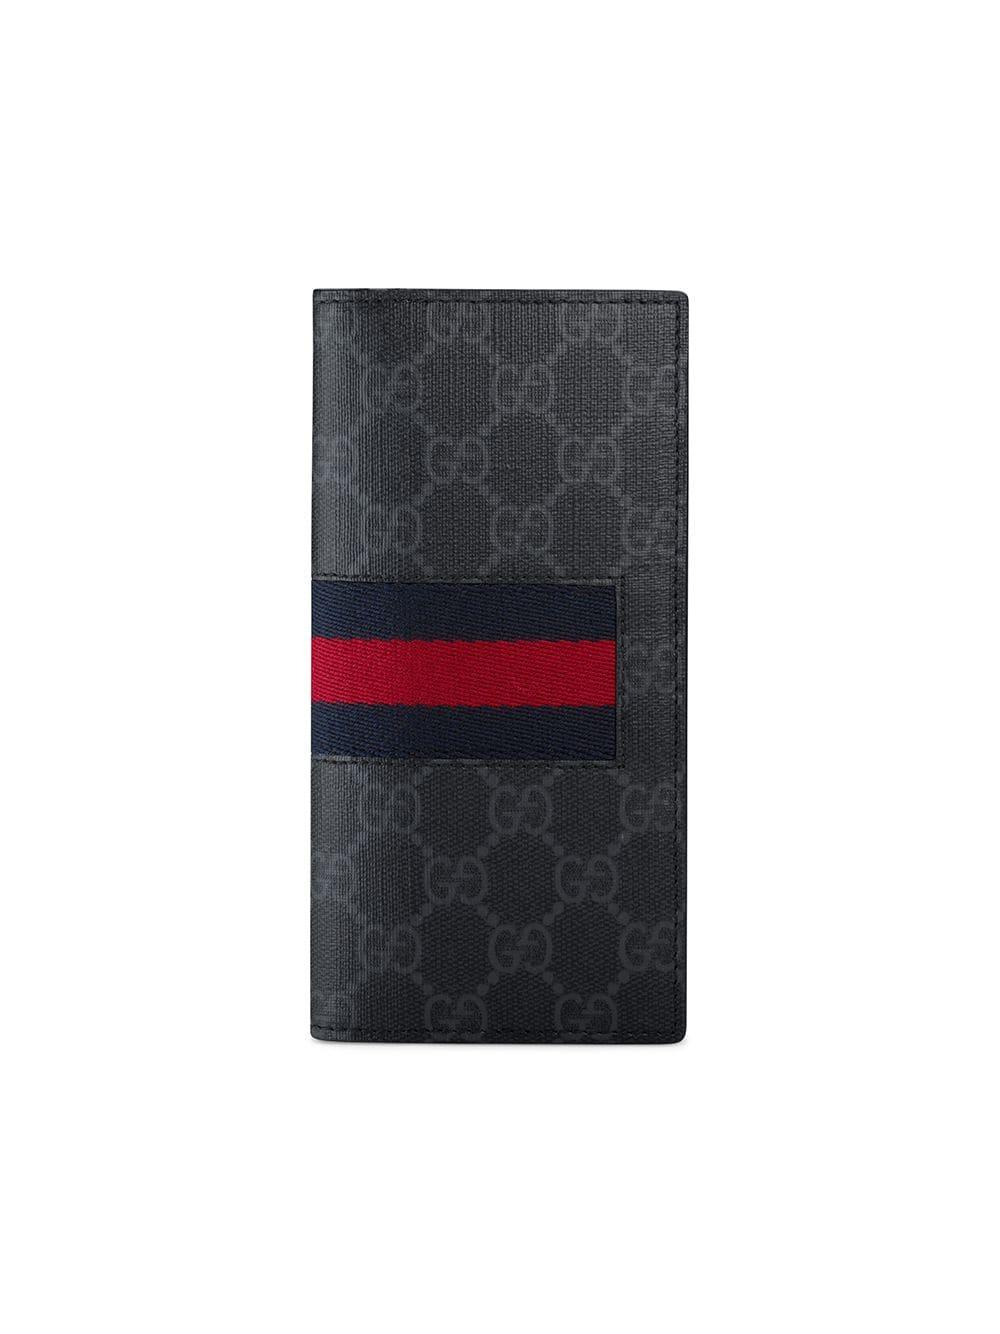 GG Supreme Wallet in Black - Gucci